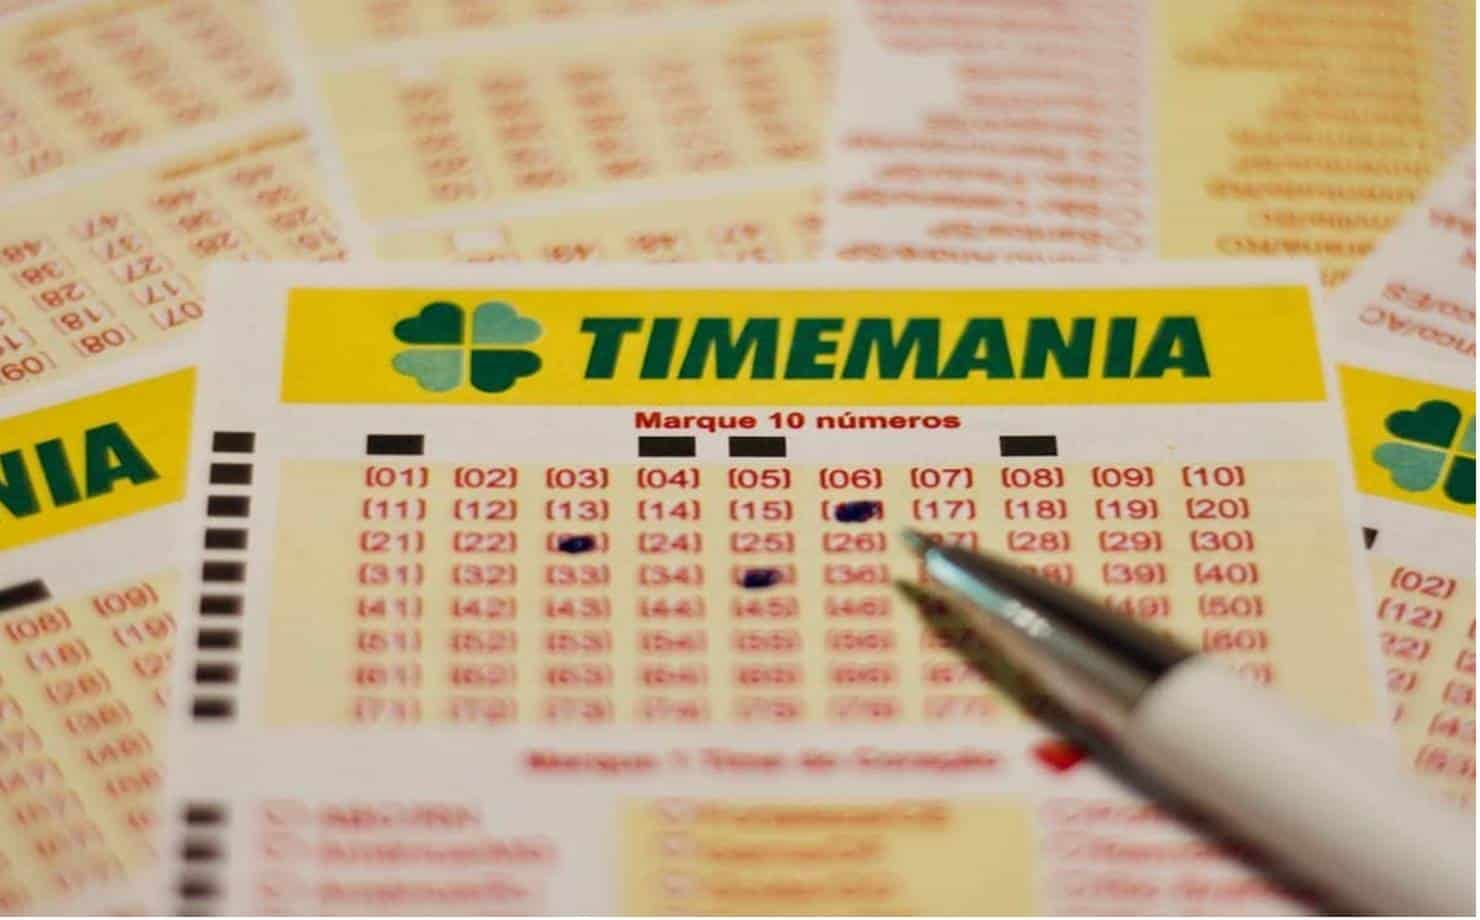 Timemania: confira o resultado do concurso 1848